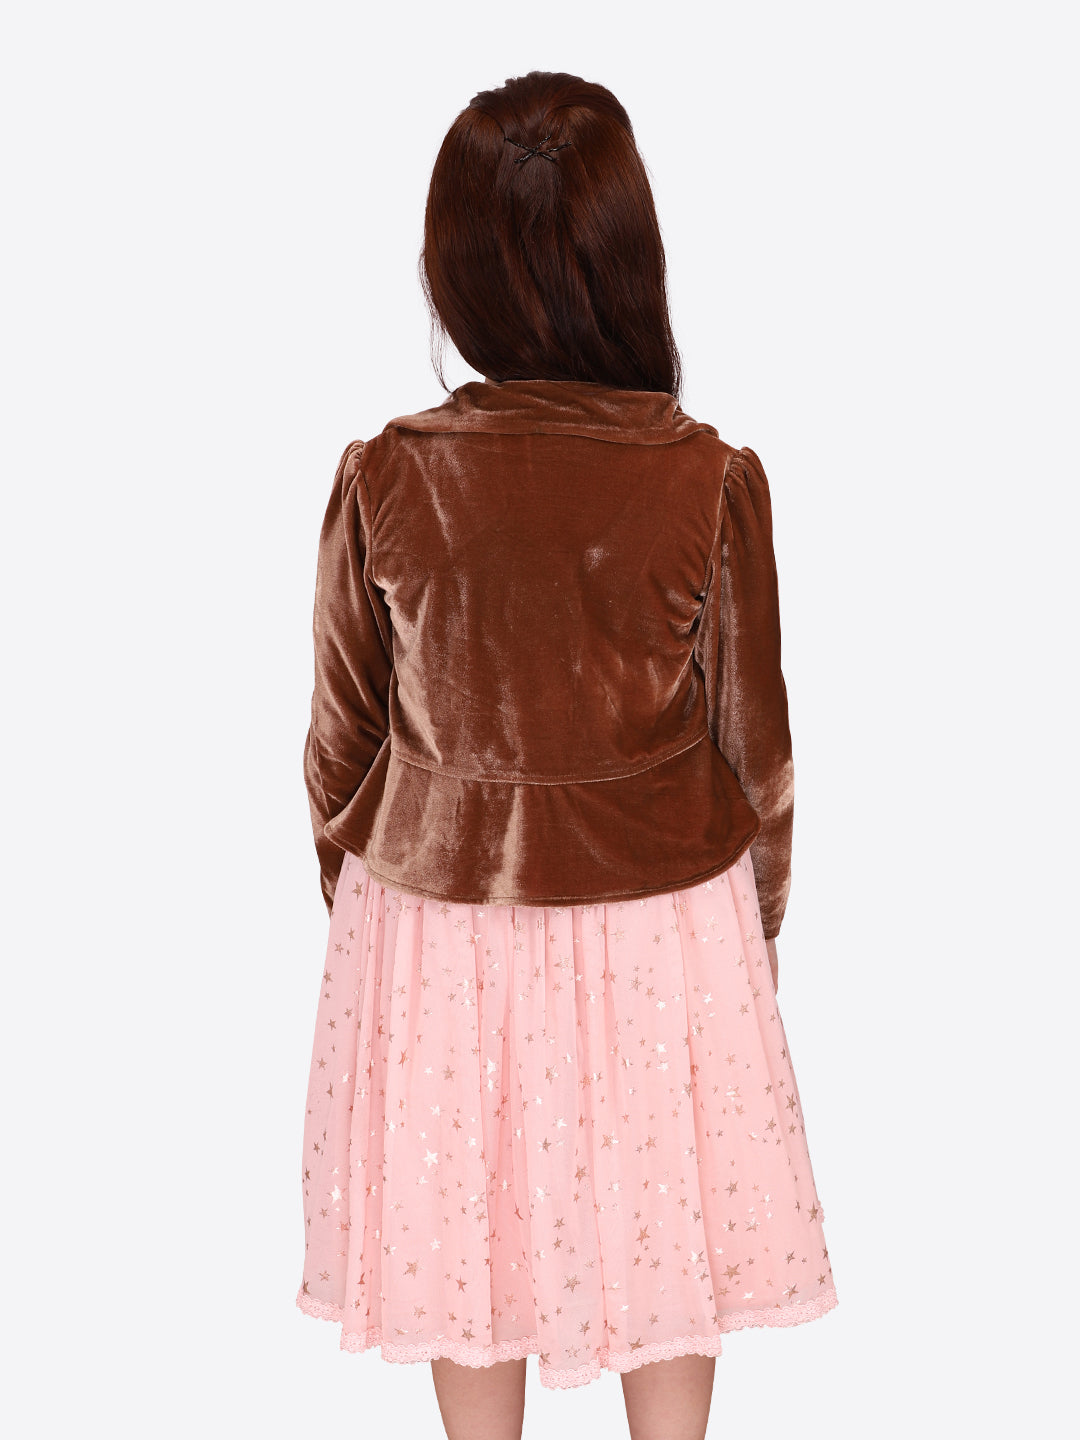 Baby Girls Midi/Knee Length Party Dress  (Brown, Full Sleeve)